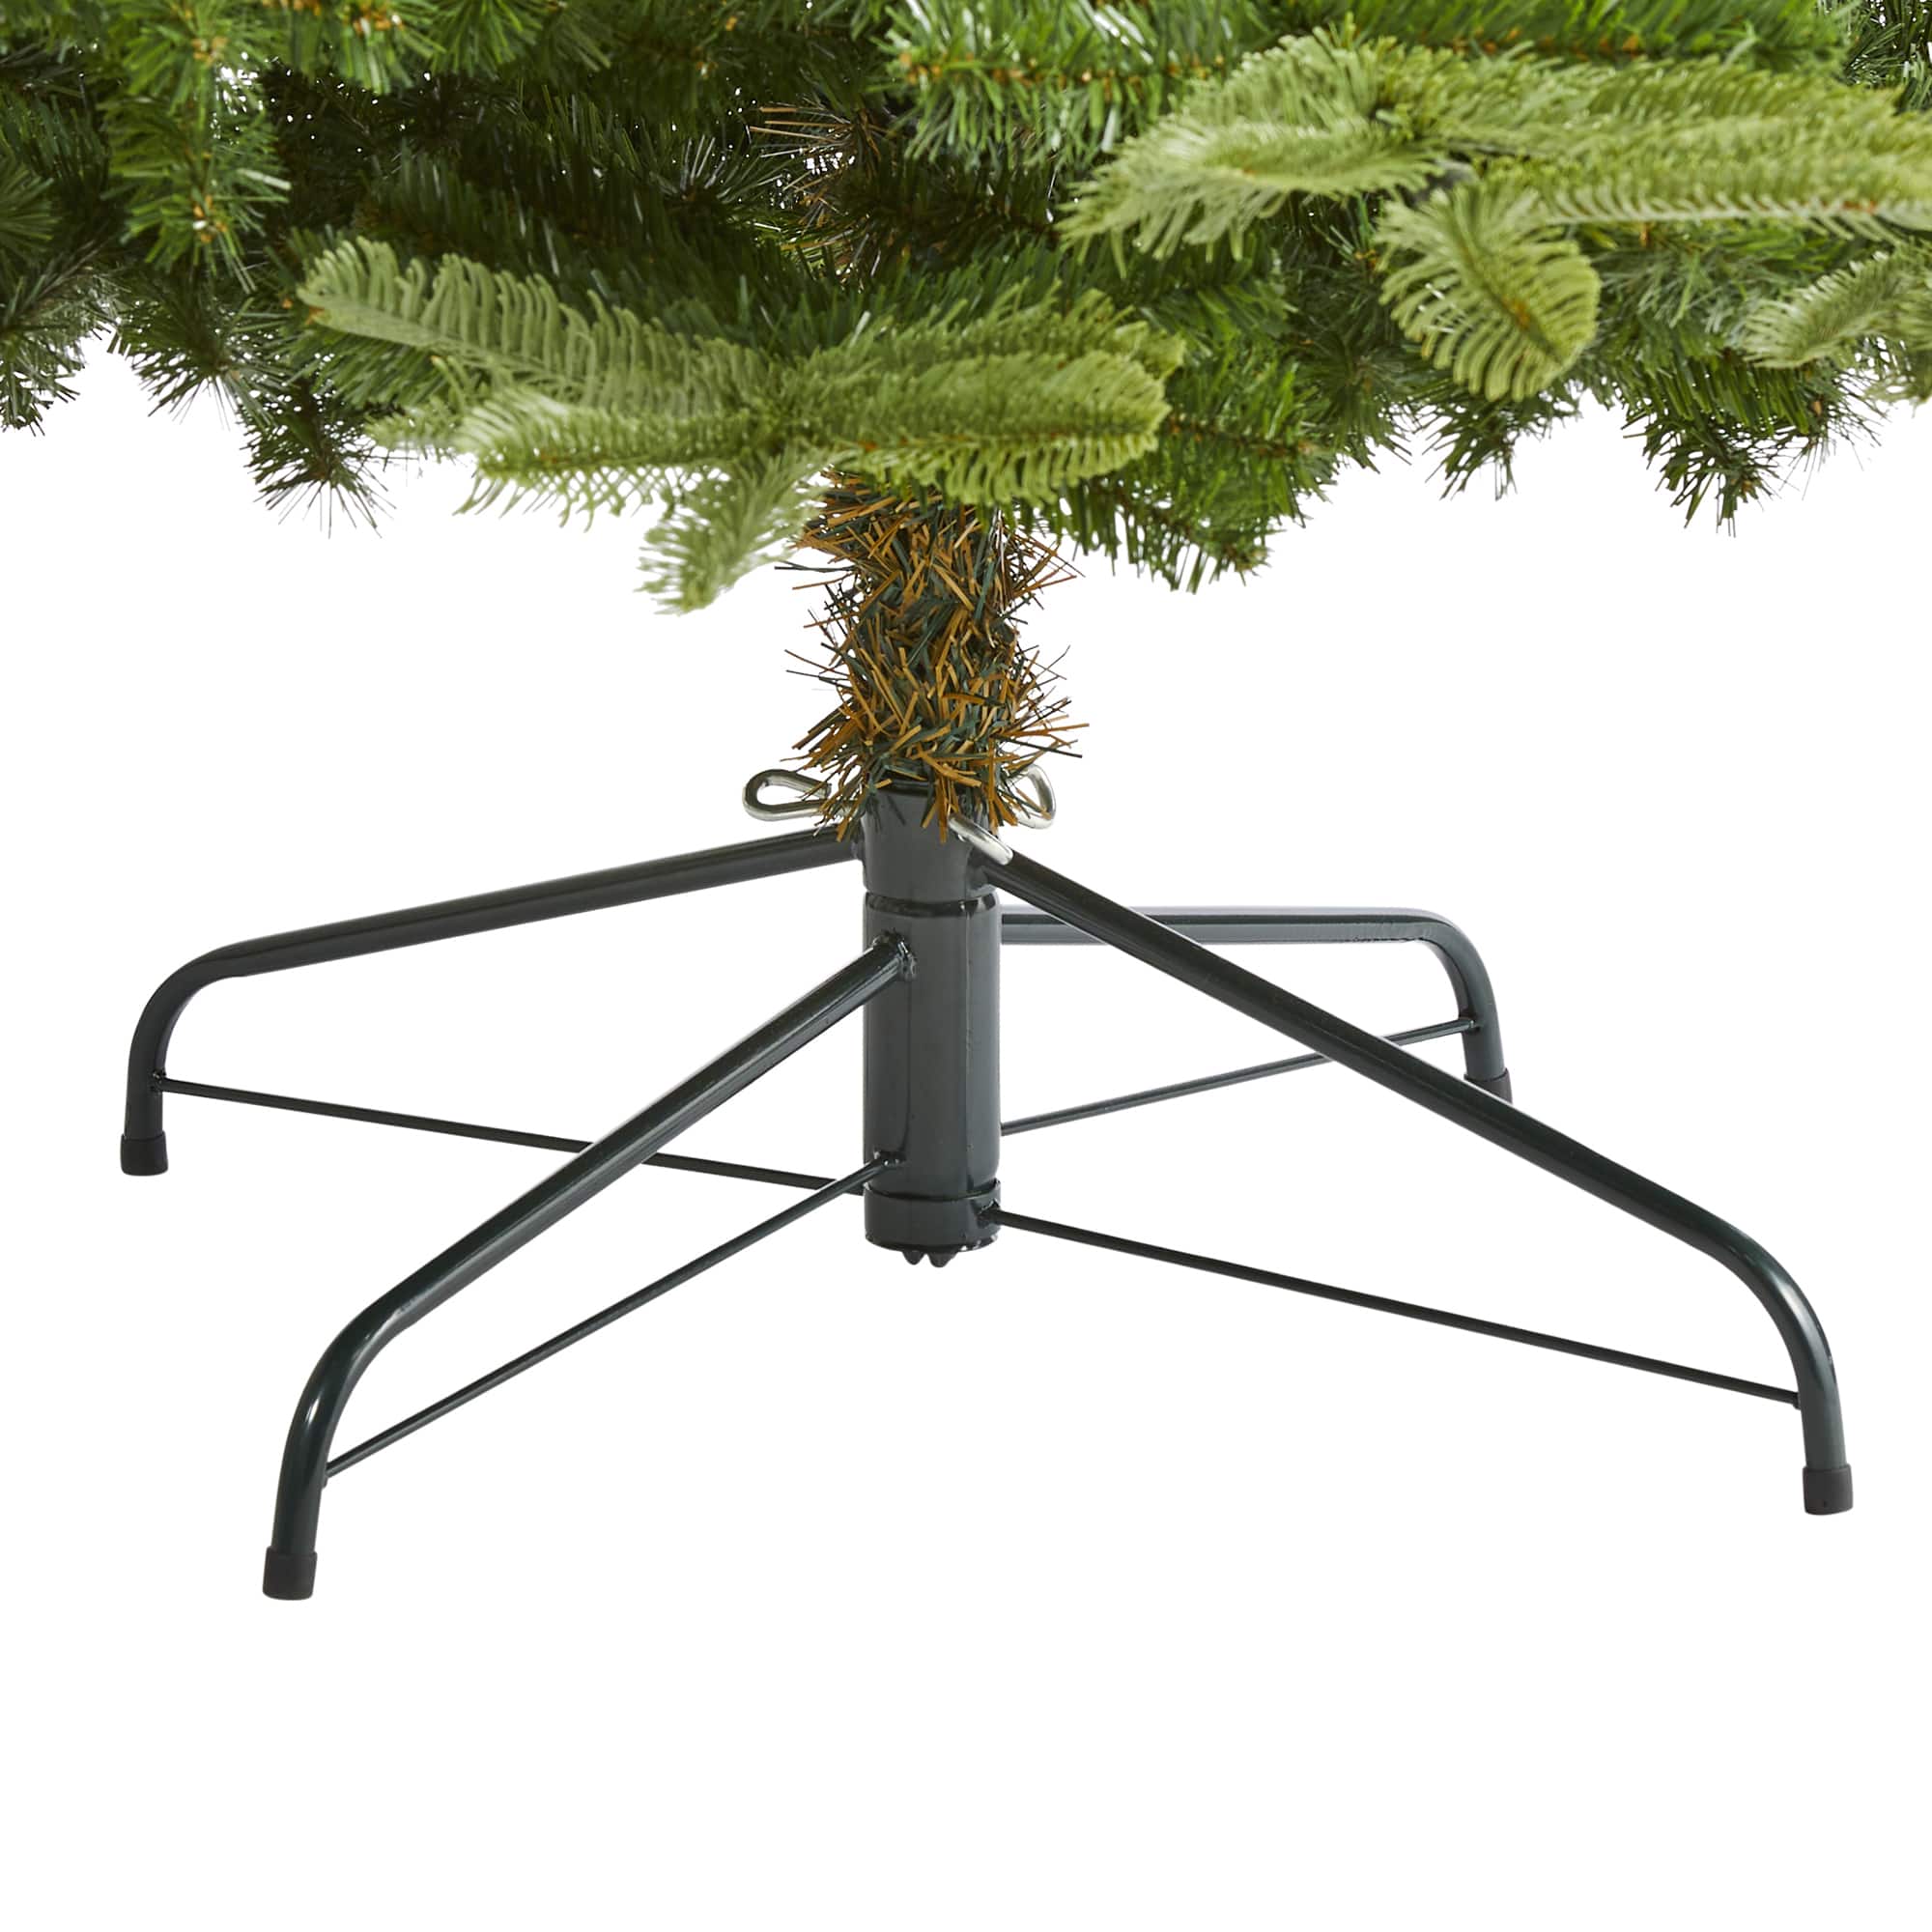 7.5ft. Unlit Layered Washington Spruce Artificial Christmas Tree